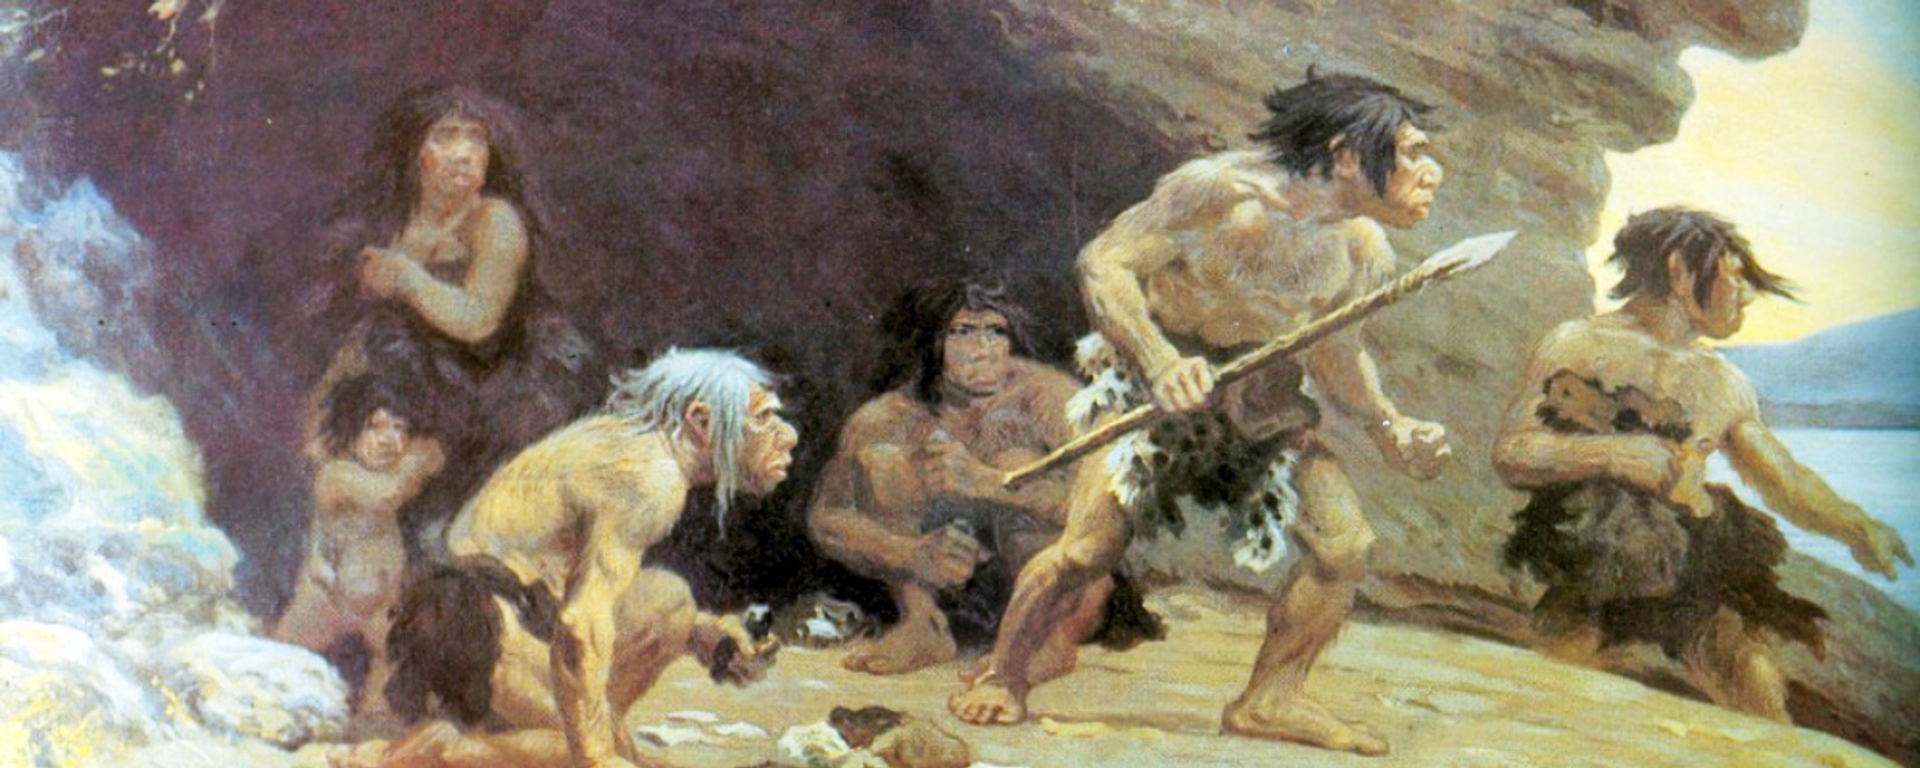 Los neandertales, imagen ilustrativa - Sputnik Mundo, 1920, 12.02.2021